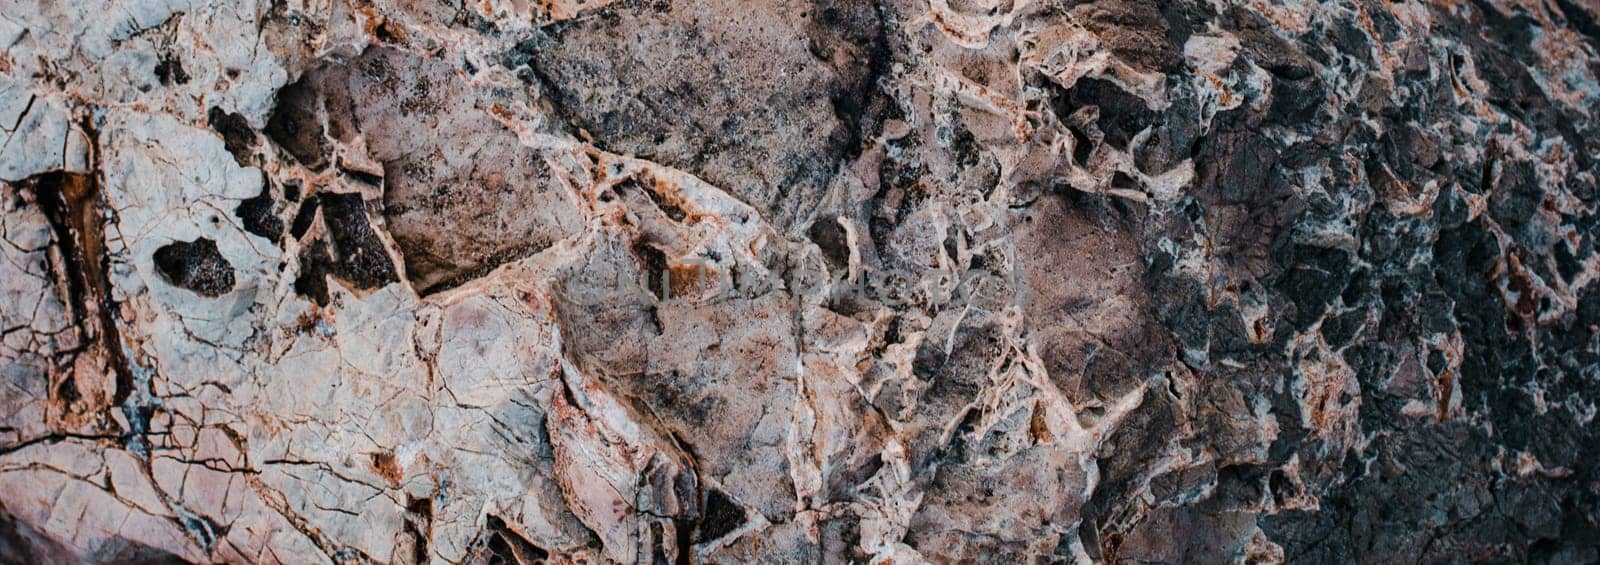 Sea cracked granite textured rock concept photo. Mediterranean sea rough surfaces. by _Nataly_Nati_